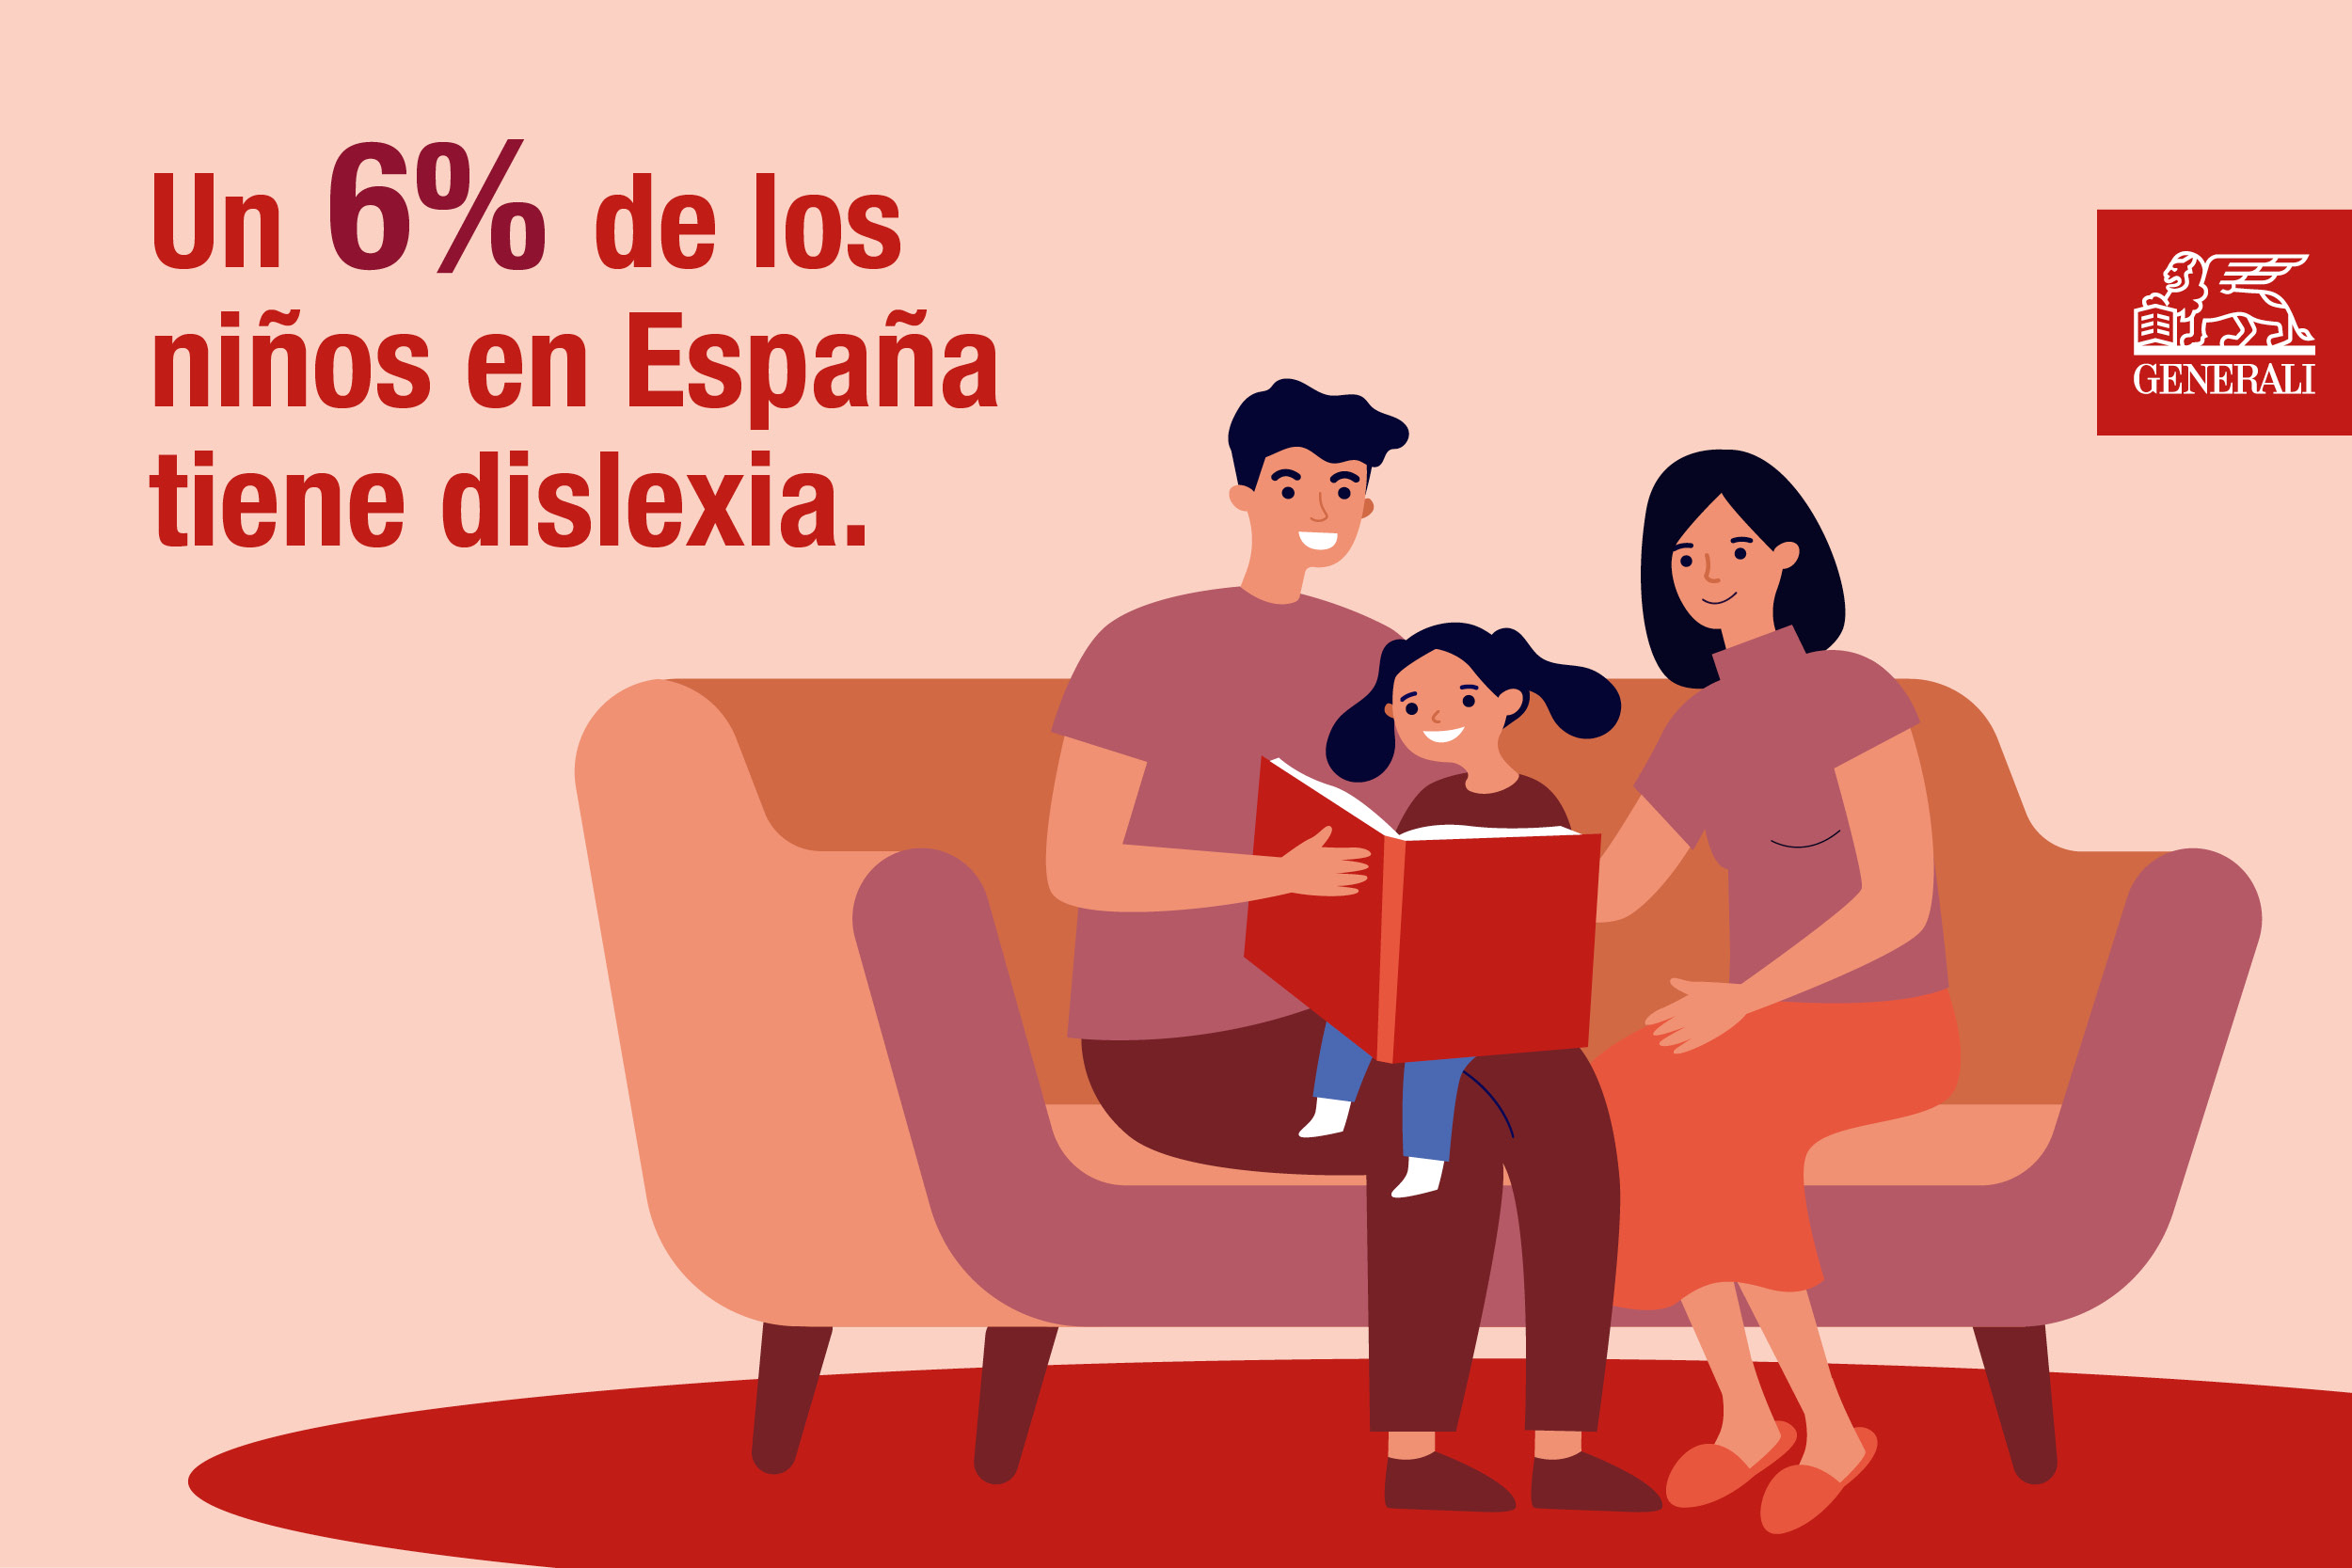 Generali Spain_Dyslexia in children_Mini Graphic_0806212.jpg